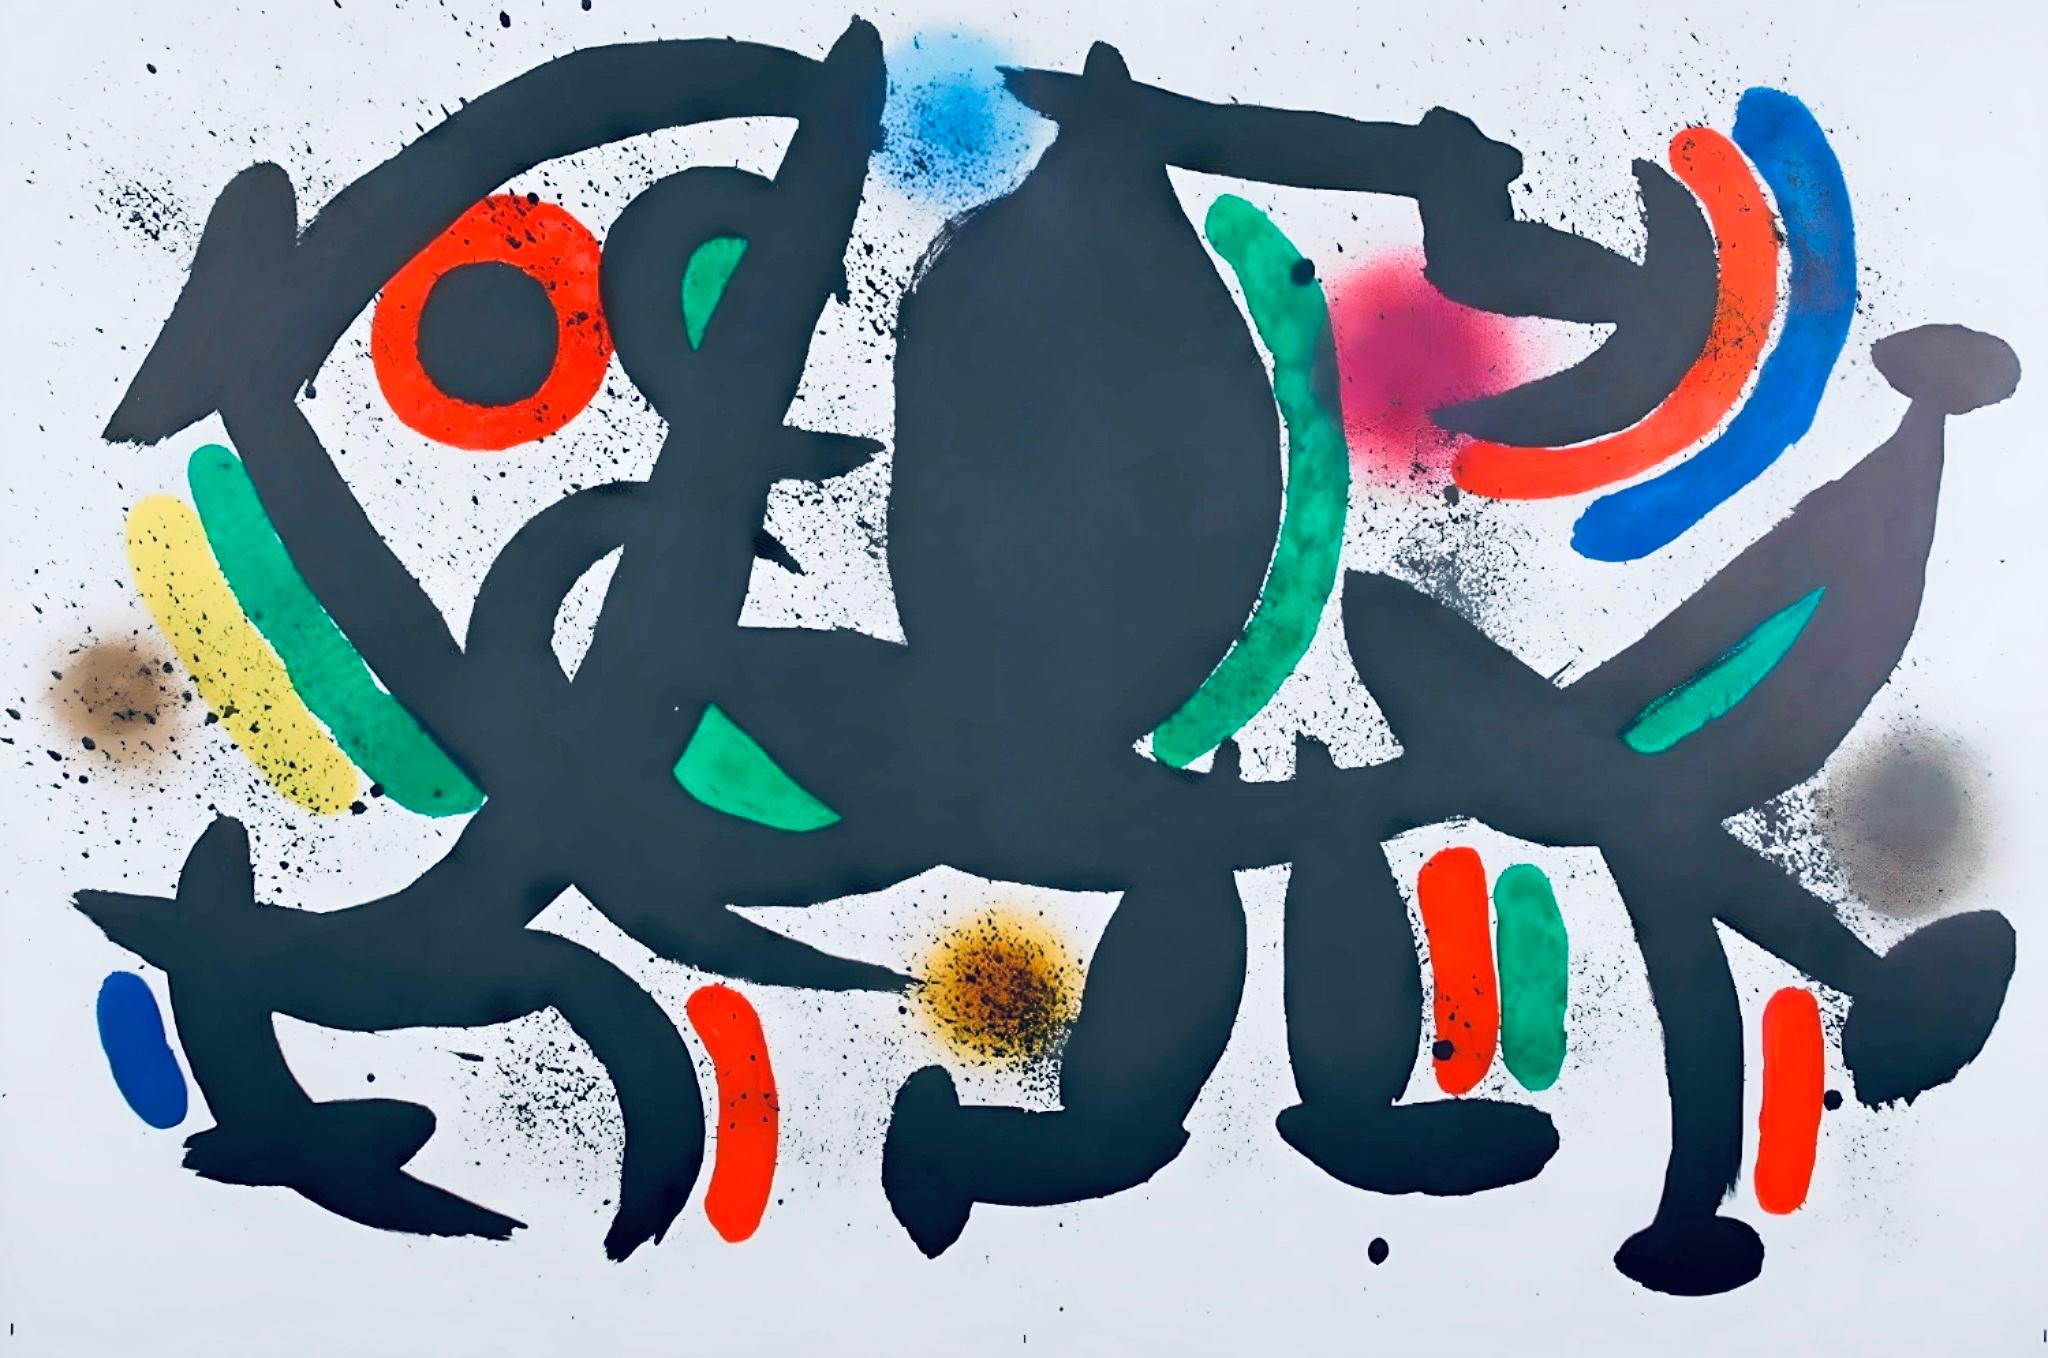 Joan Miró Abstract Print - Miro, Composition (Cramer 160; Mourlot 864), 1972 (after)